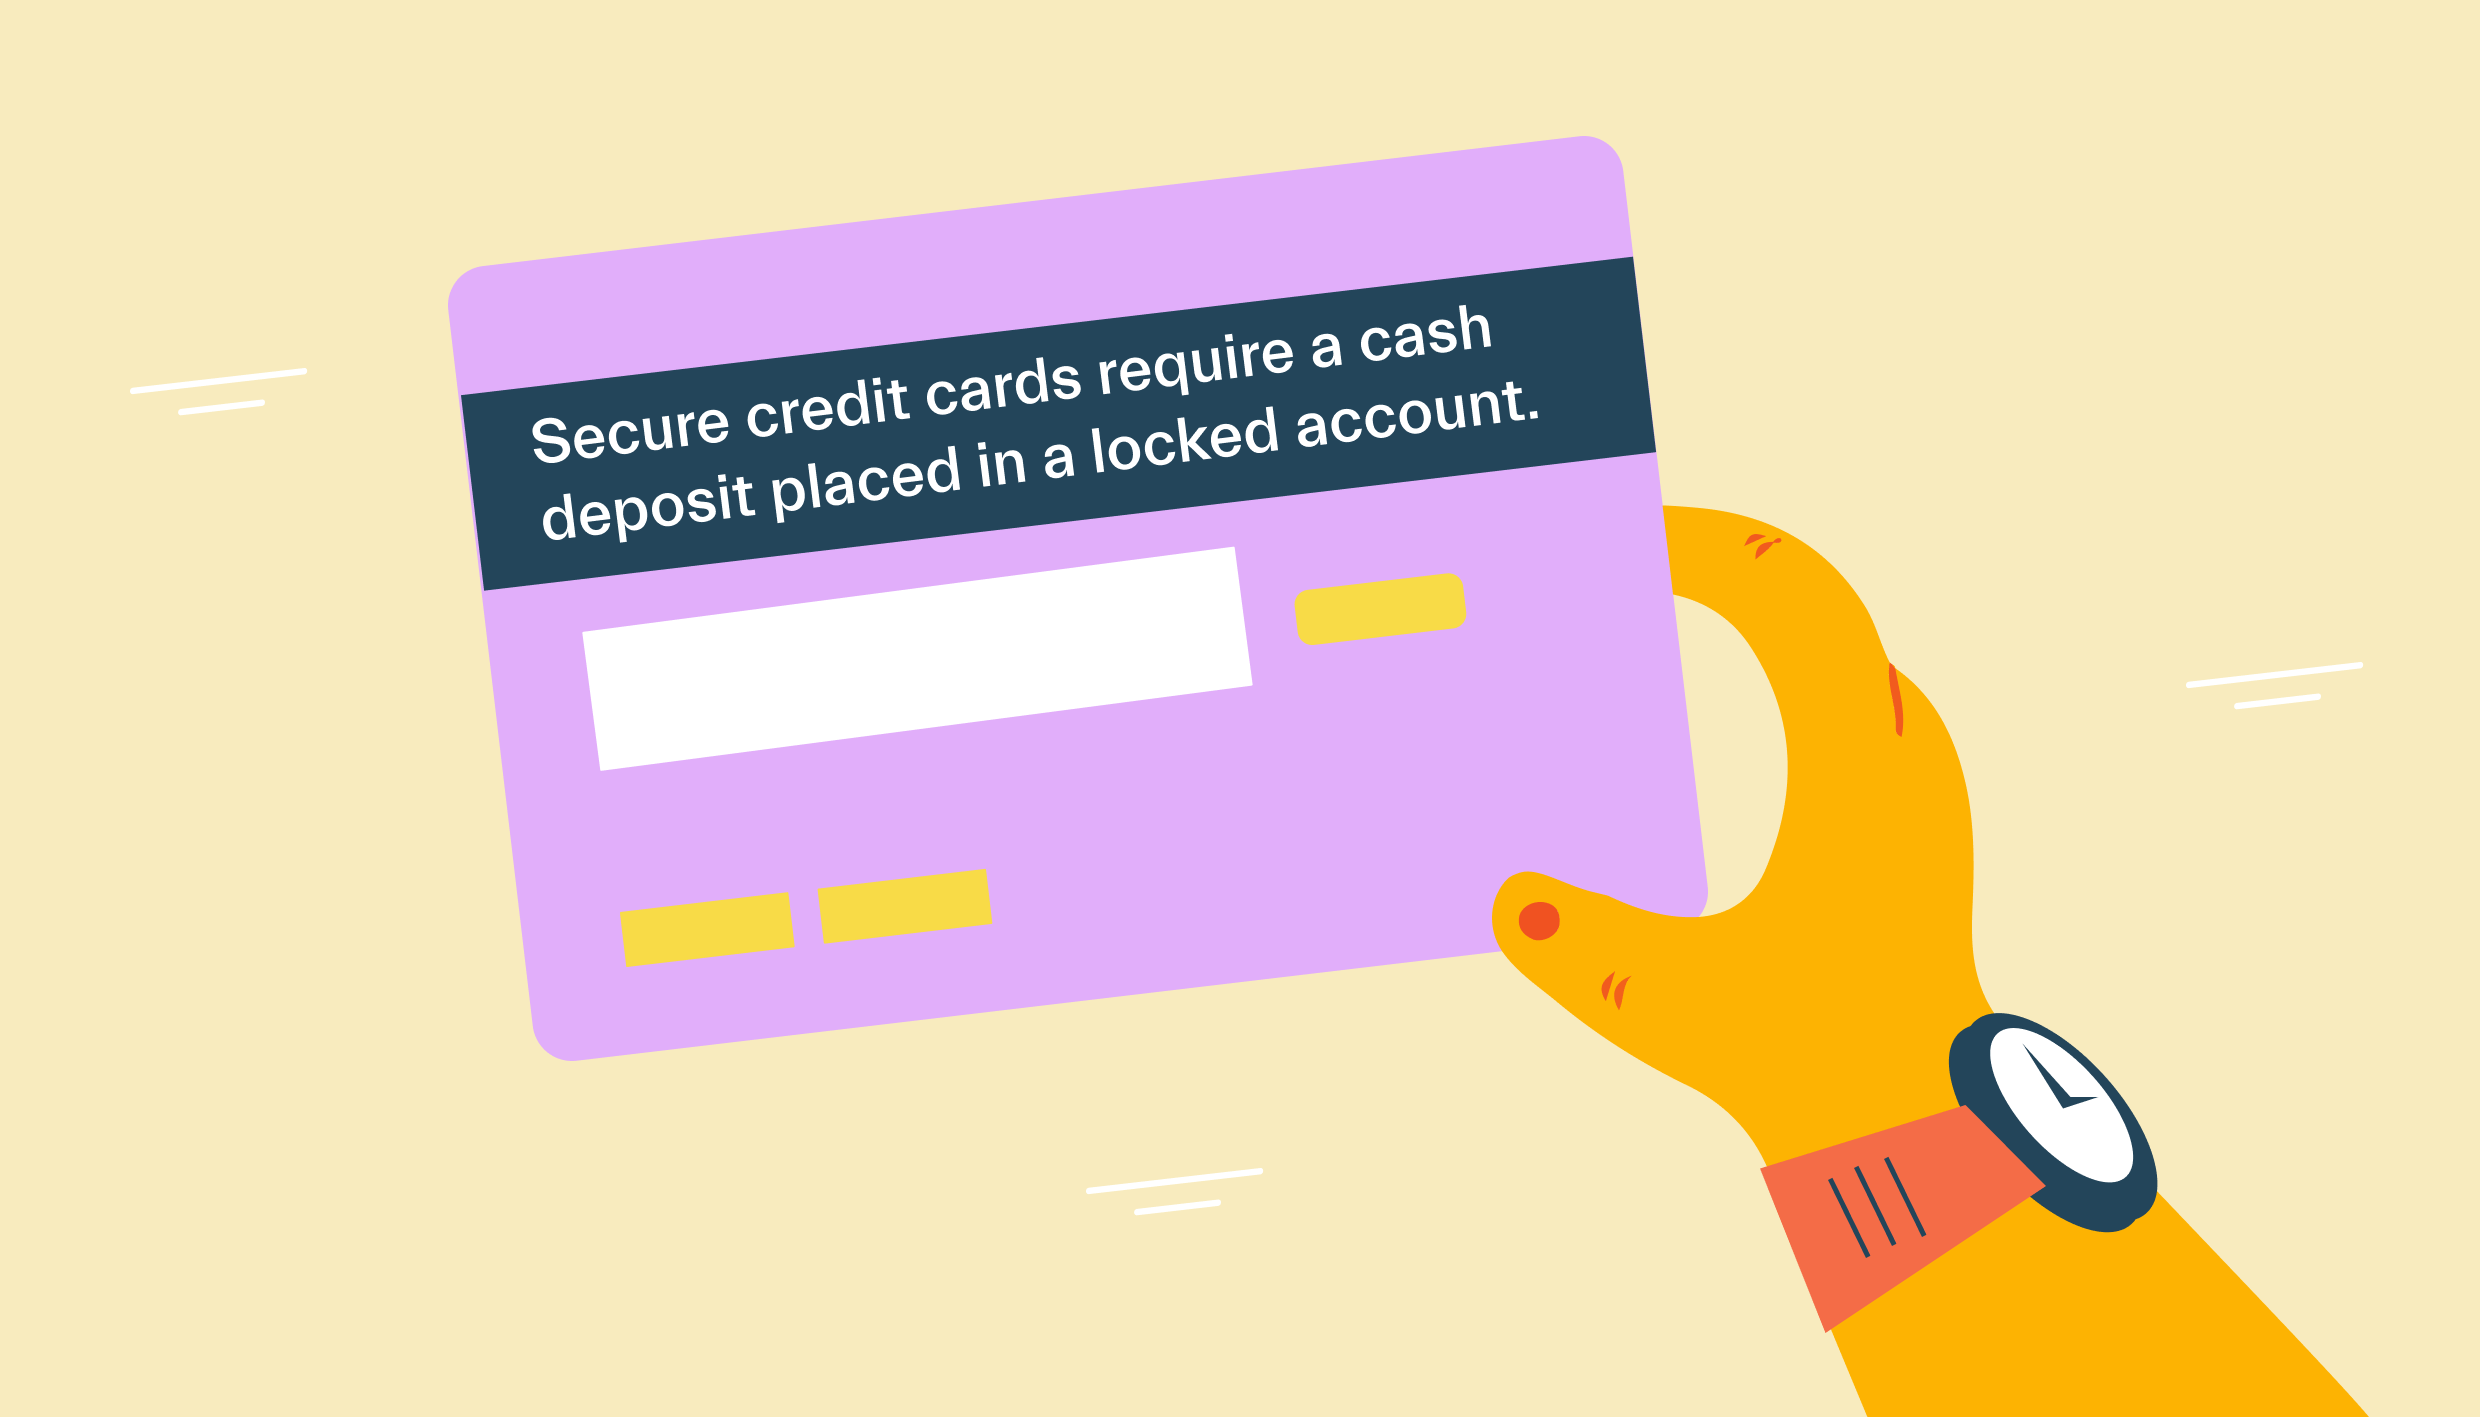 Secured credit card